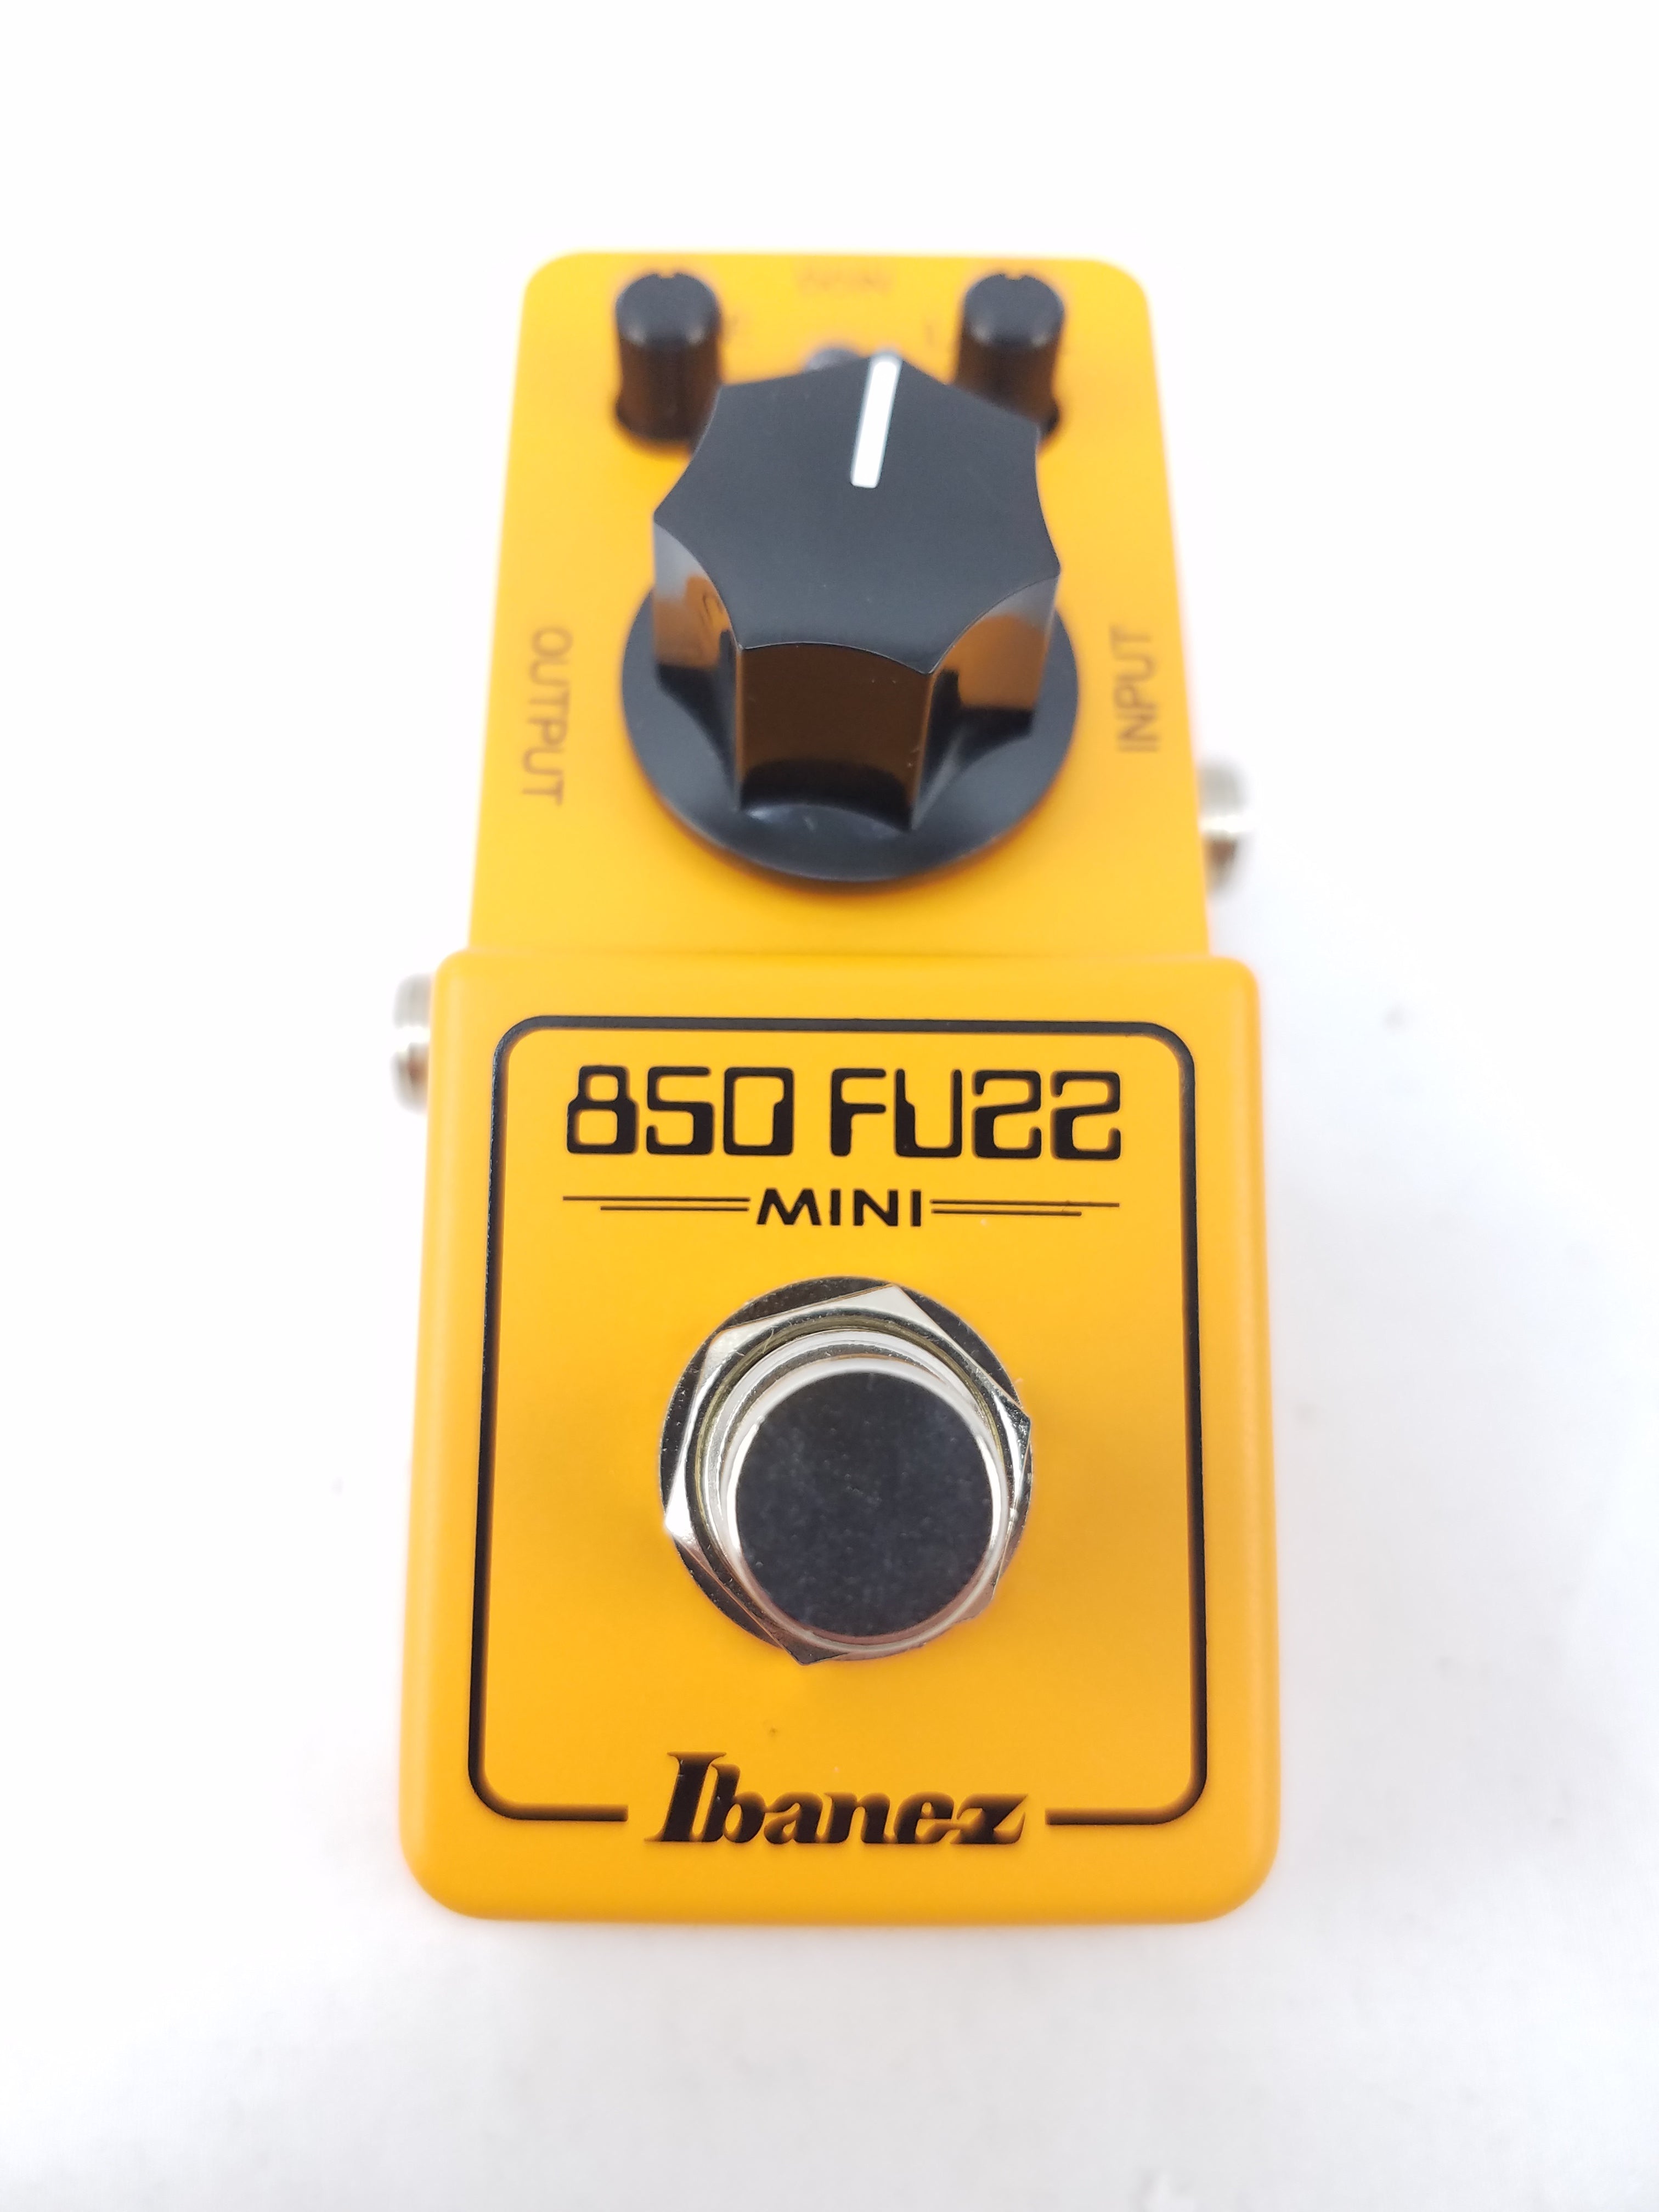 Ibanez FZMINI 850 Fuzz Mini Guitar Effects Pedal